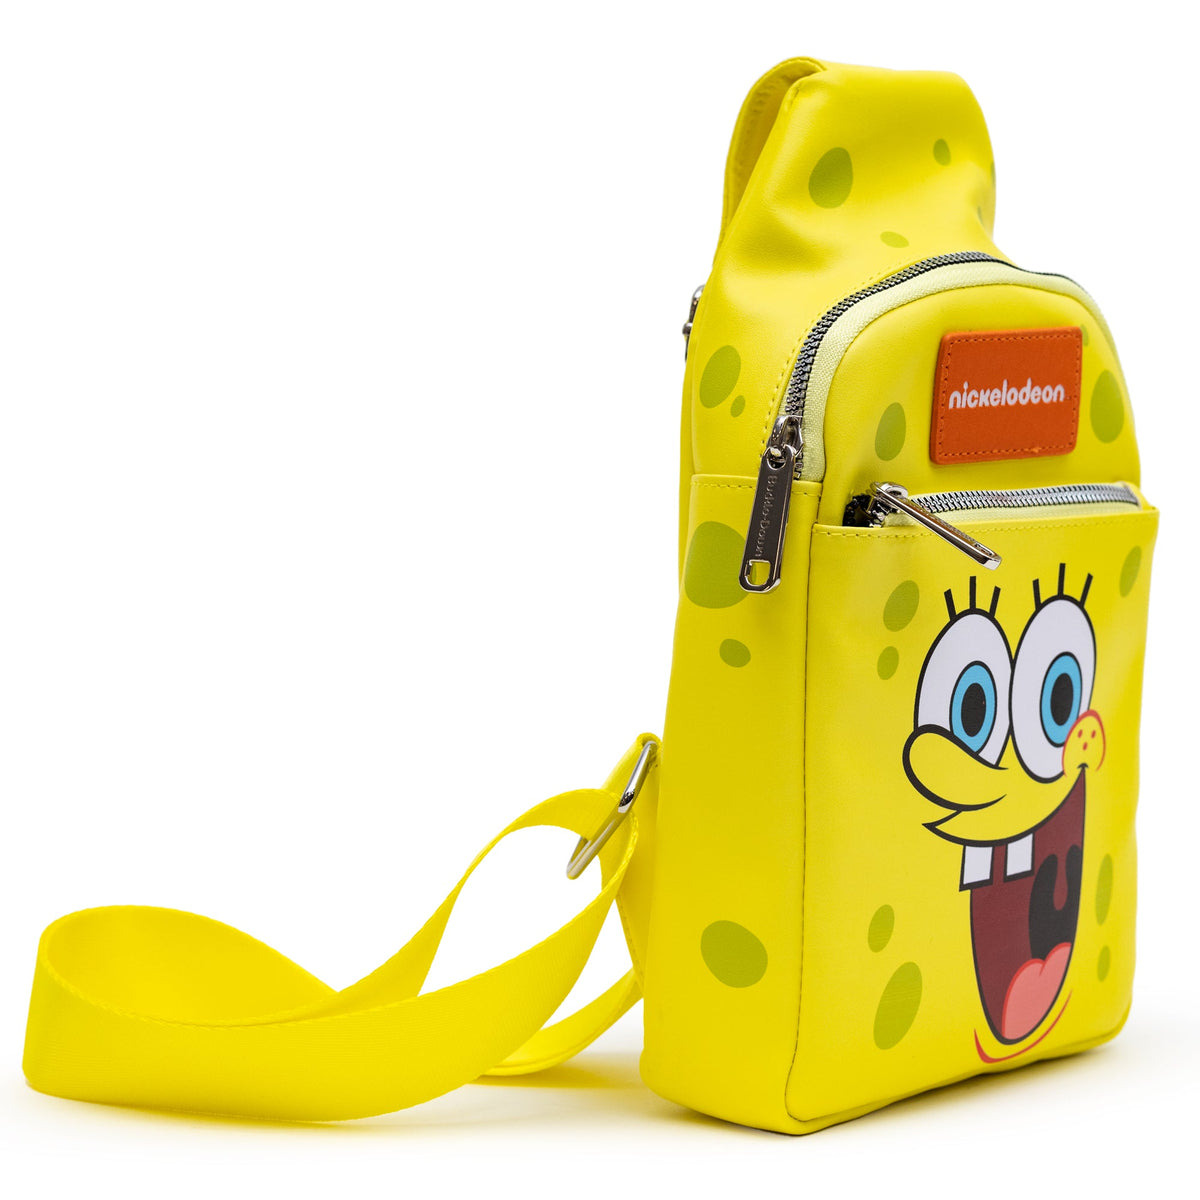 Nickelodeon Bag, Sling, SpongeBob SquarePants Smiling Face Character Close Up Yellow, Bounding, Vegan Leather